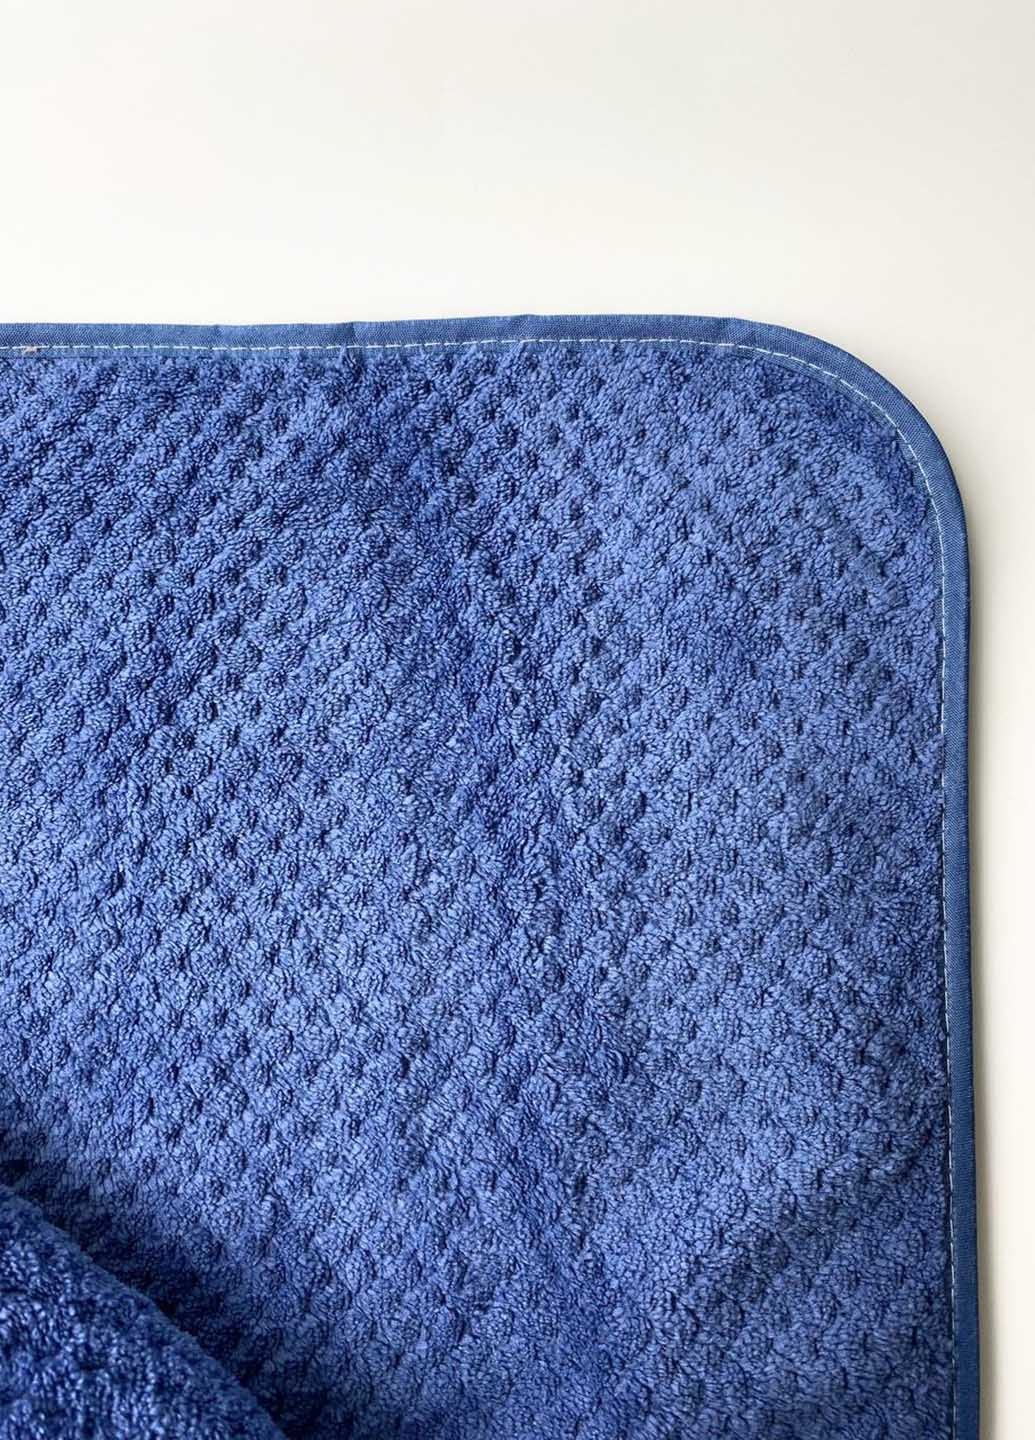 Homedec полотенце лицевое микрофибра 100х50 см однотонный синий производство - Турция